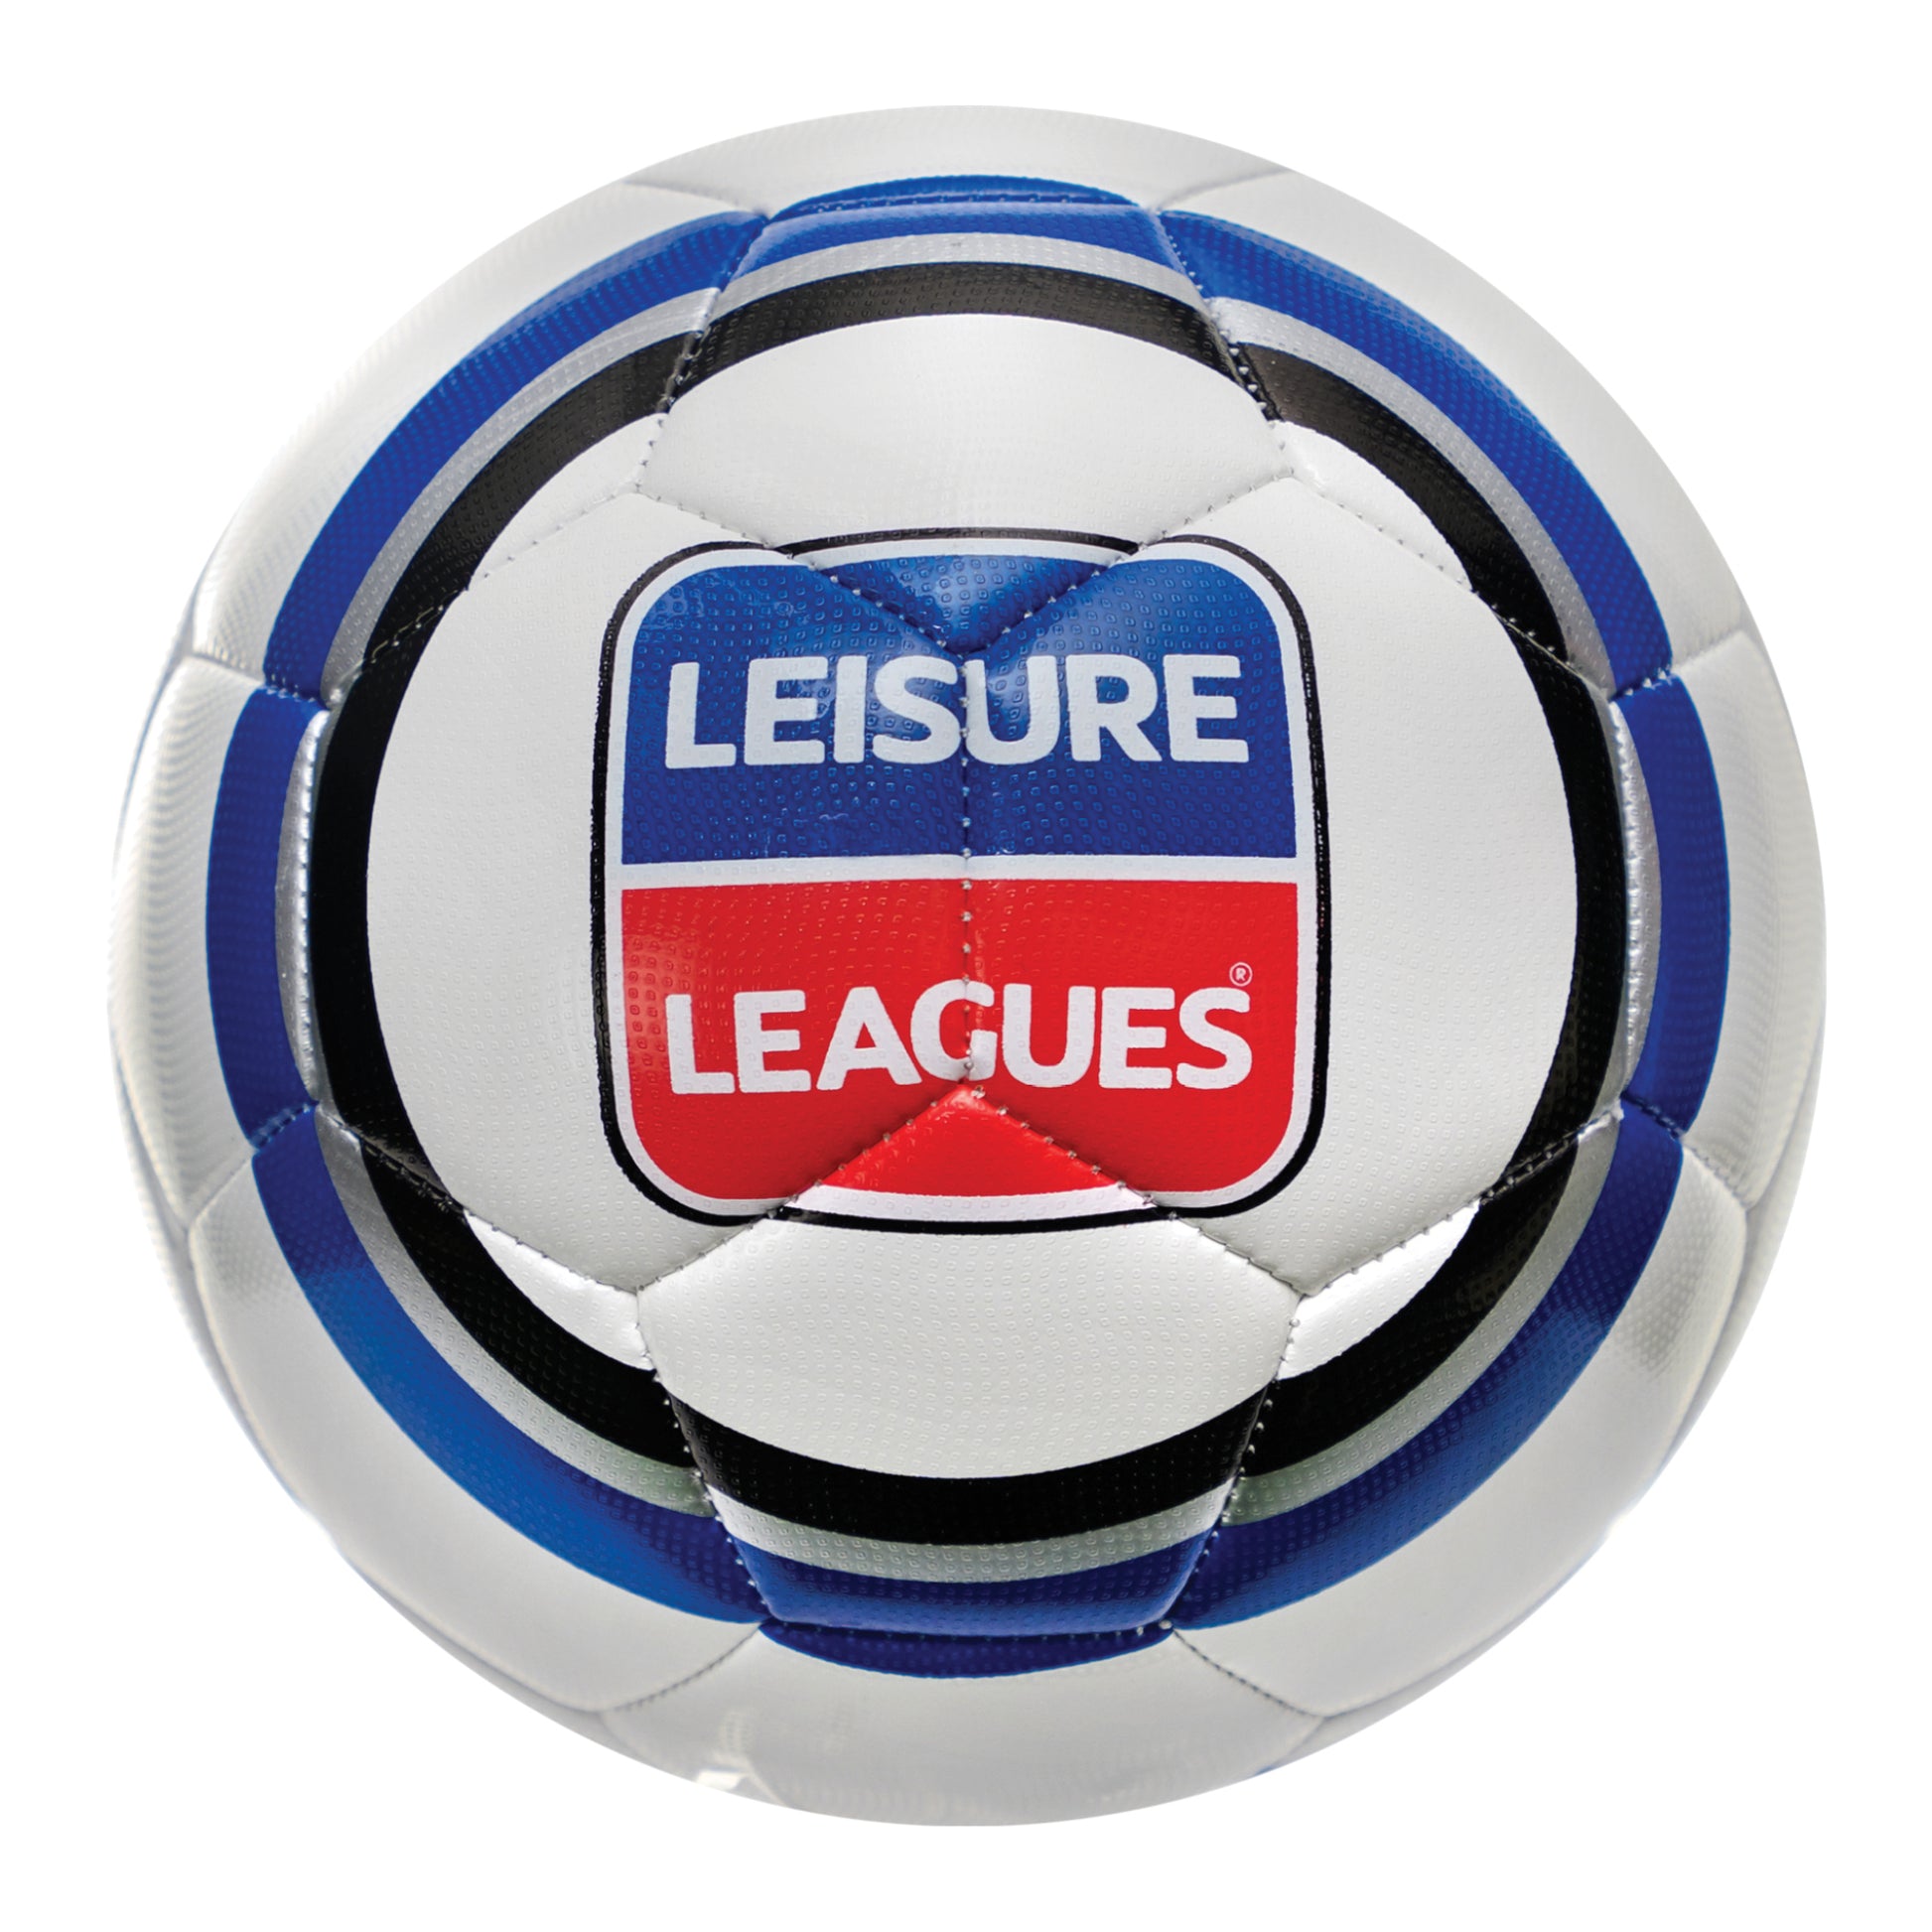 Leisure leagues football Size 5 Football White Blue black Silver